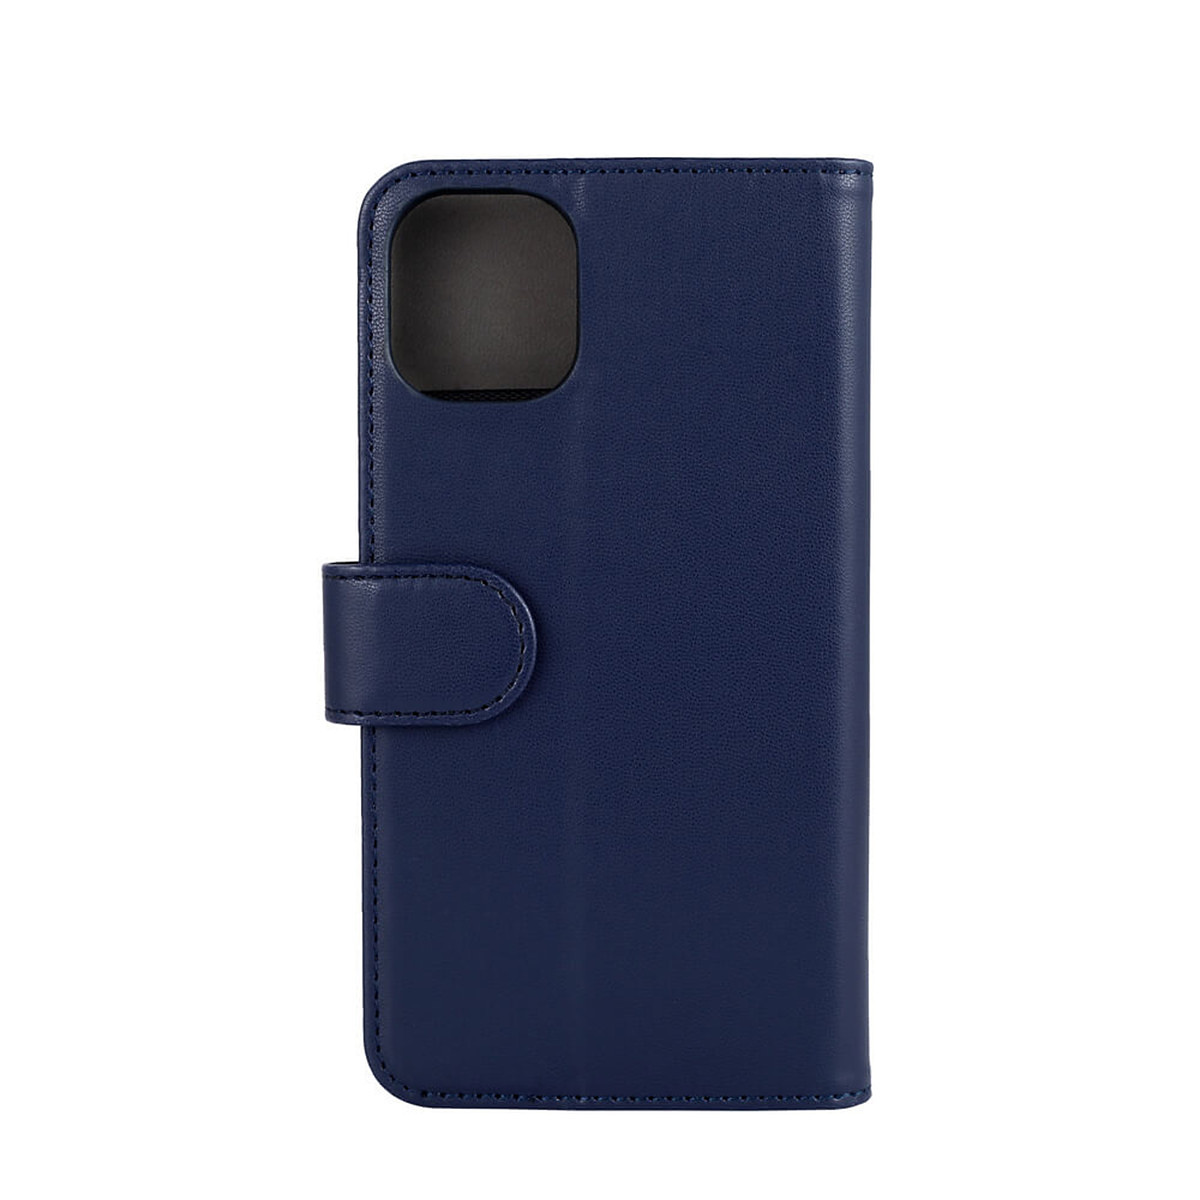 Gear plånboksväska, Limited Edition, iPhone 11, blå